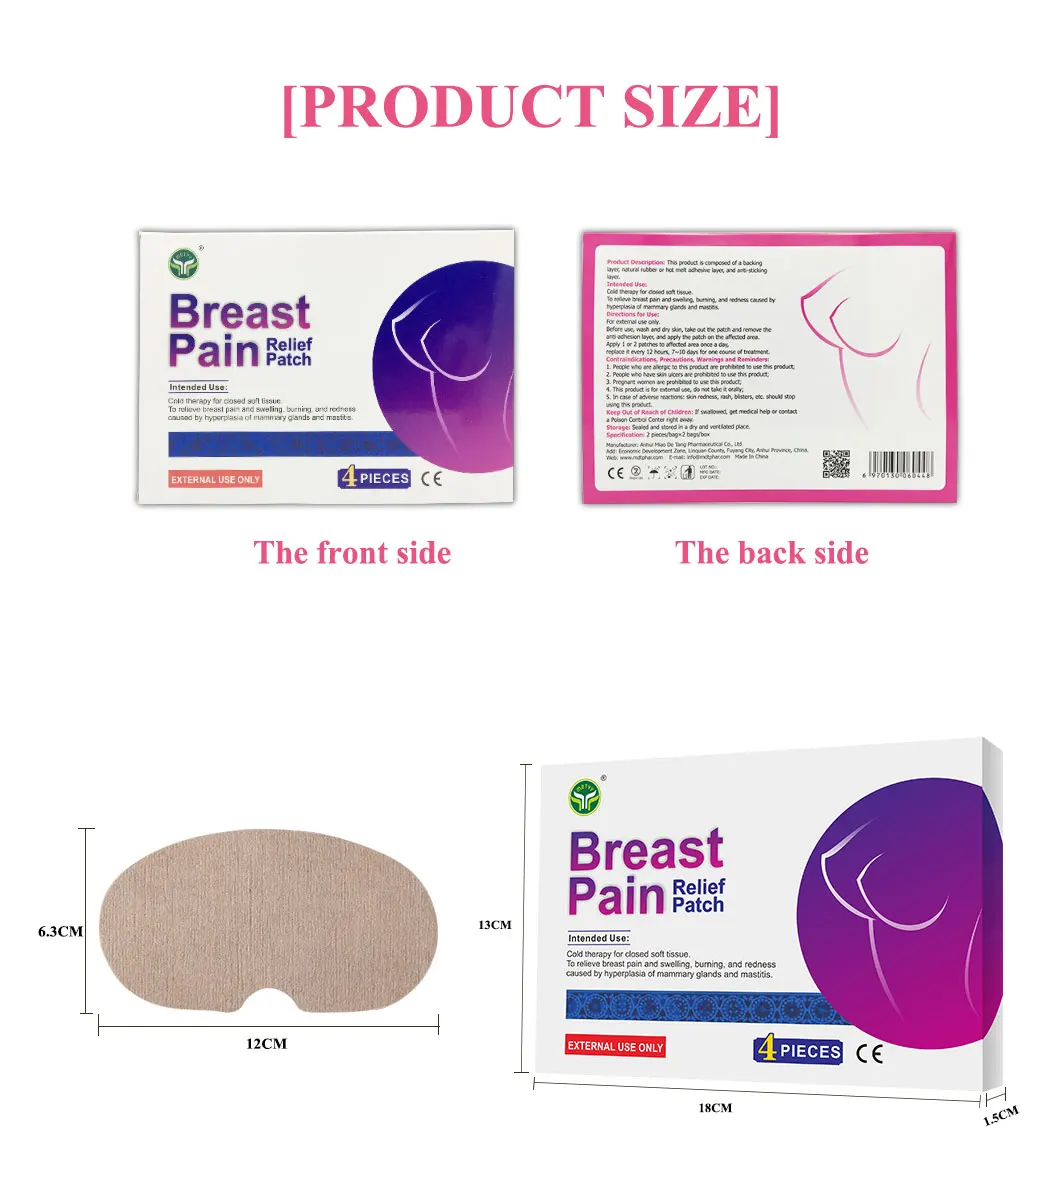 meditan equipment 100% natural ingredients breast